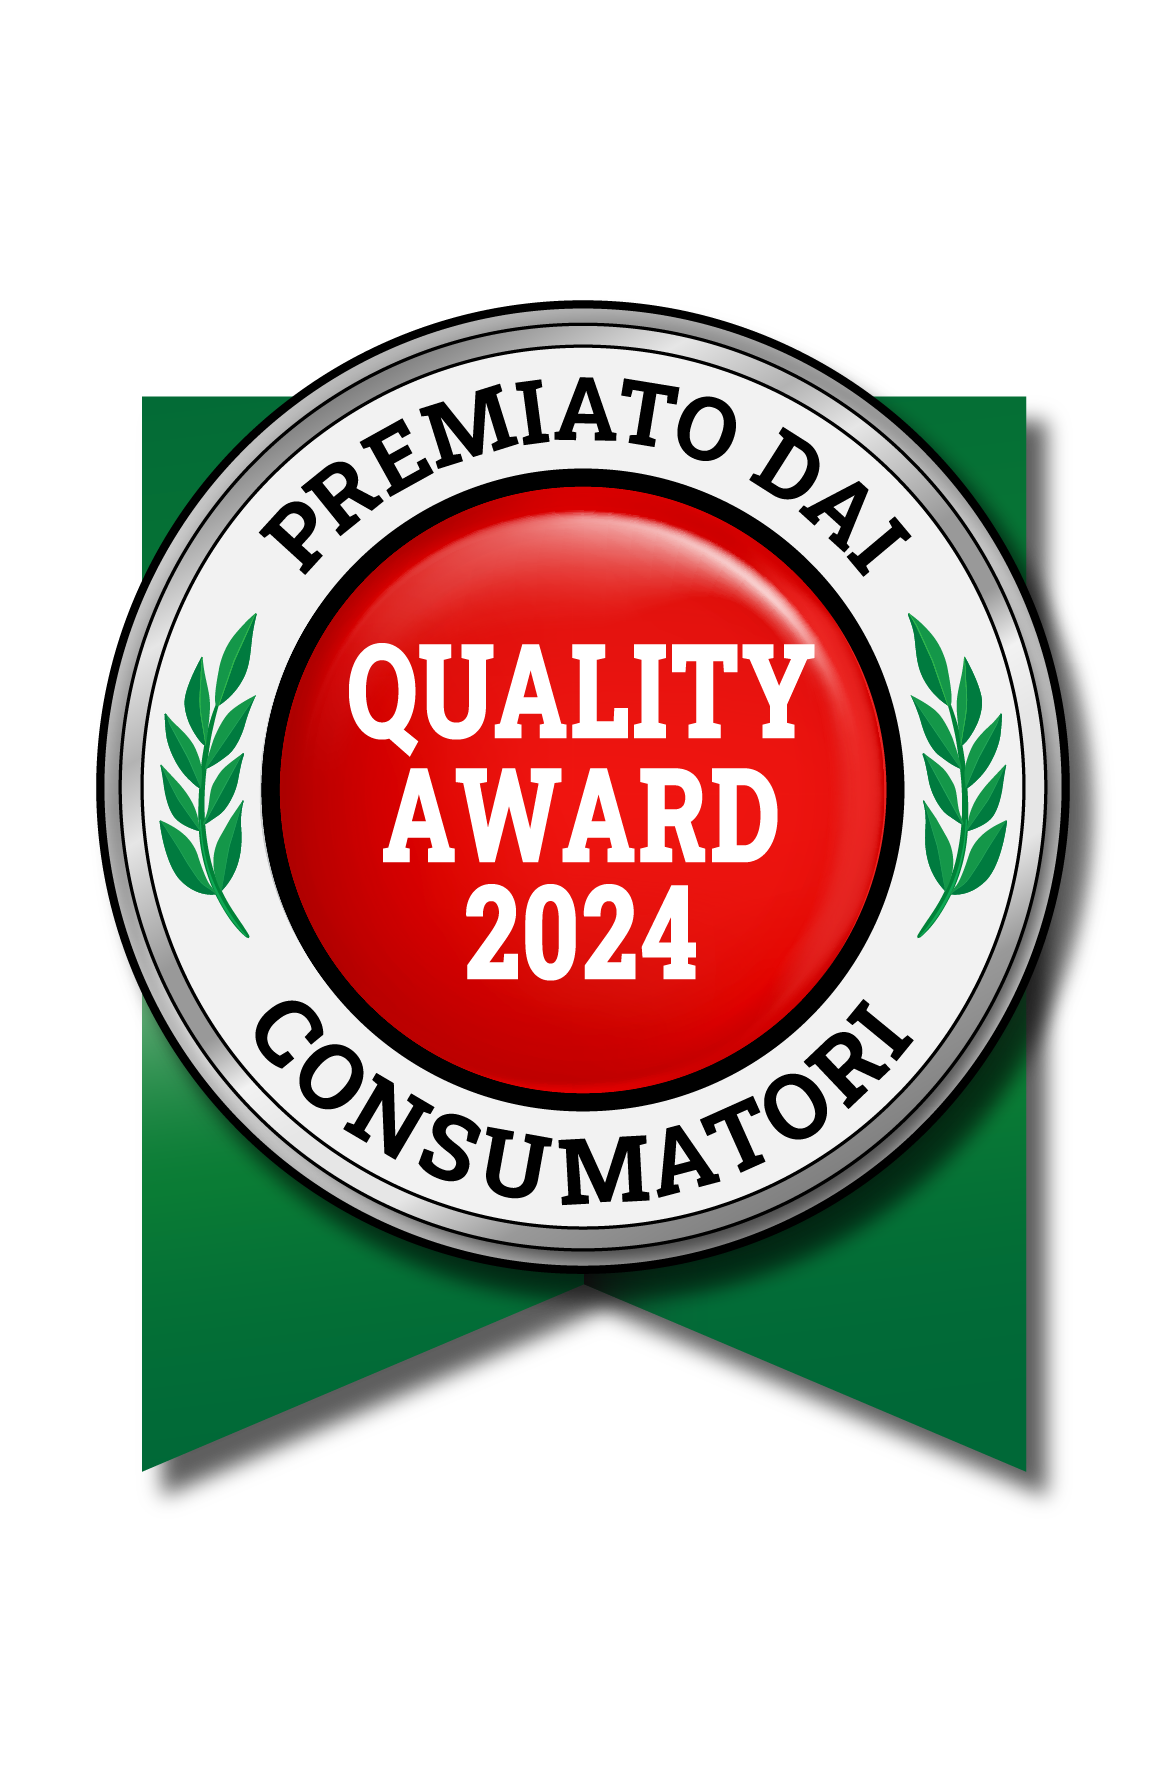 Quality Award Consumatori 2024